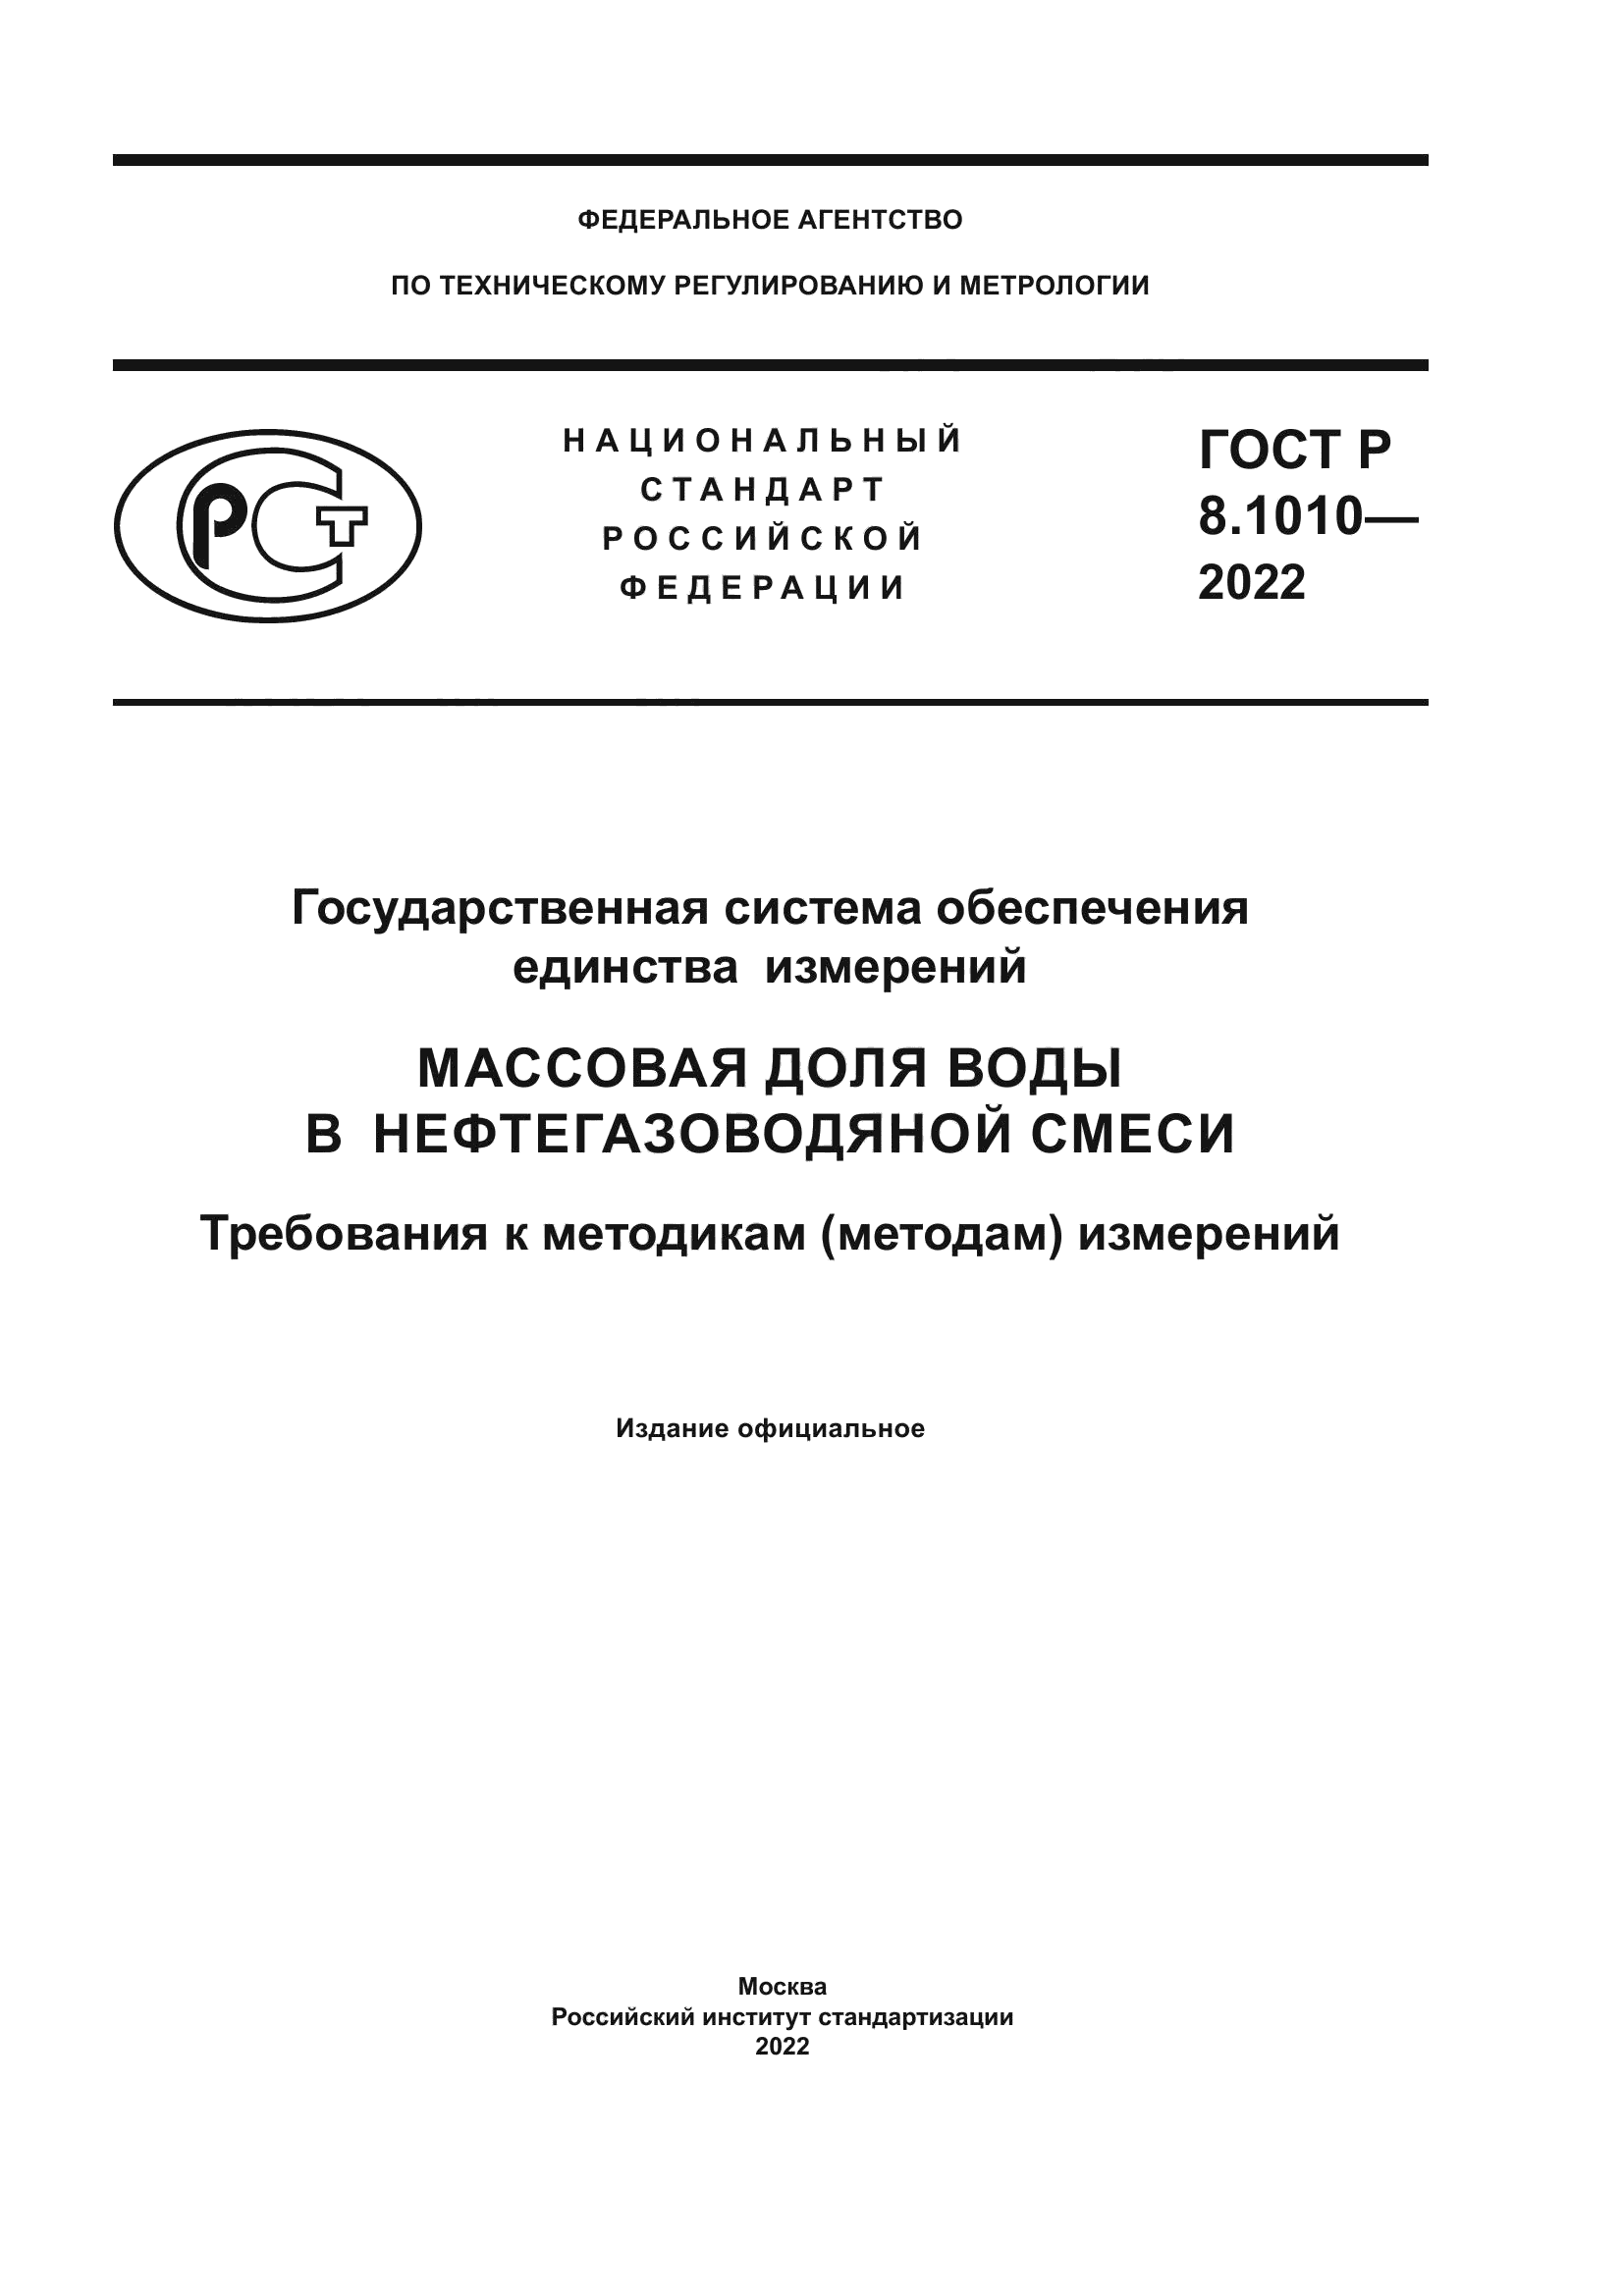 ГОСТ Р 8.1010-2022